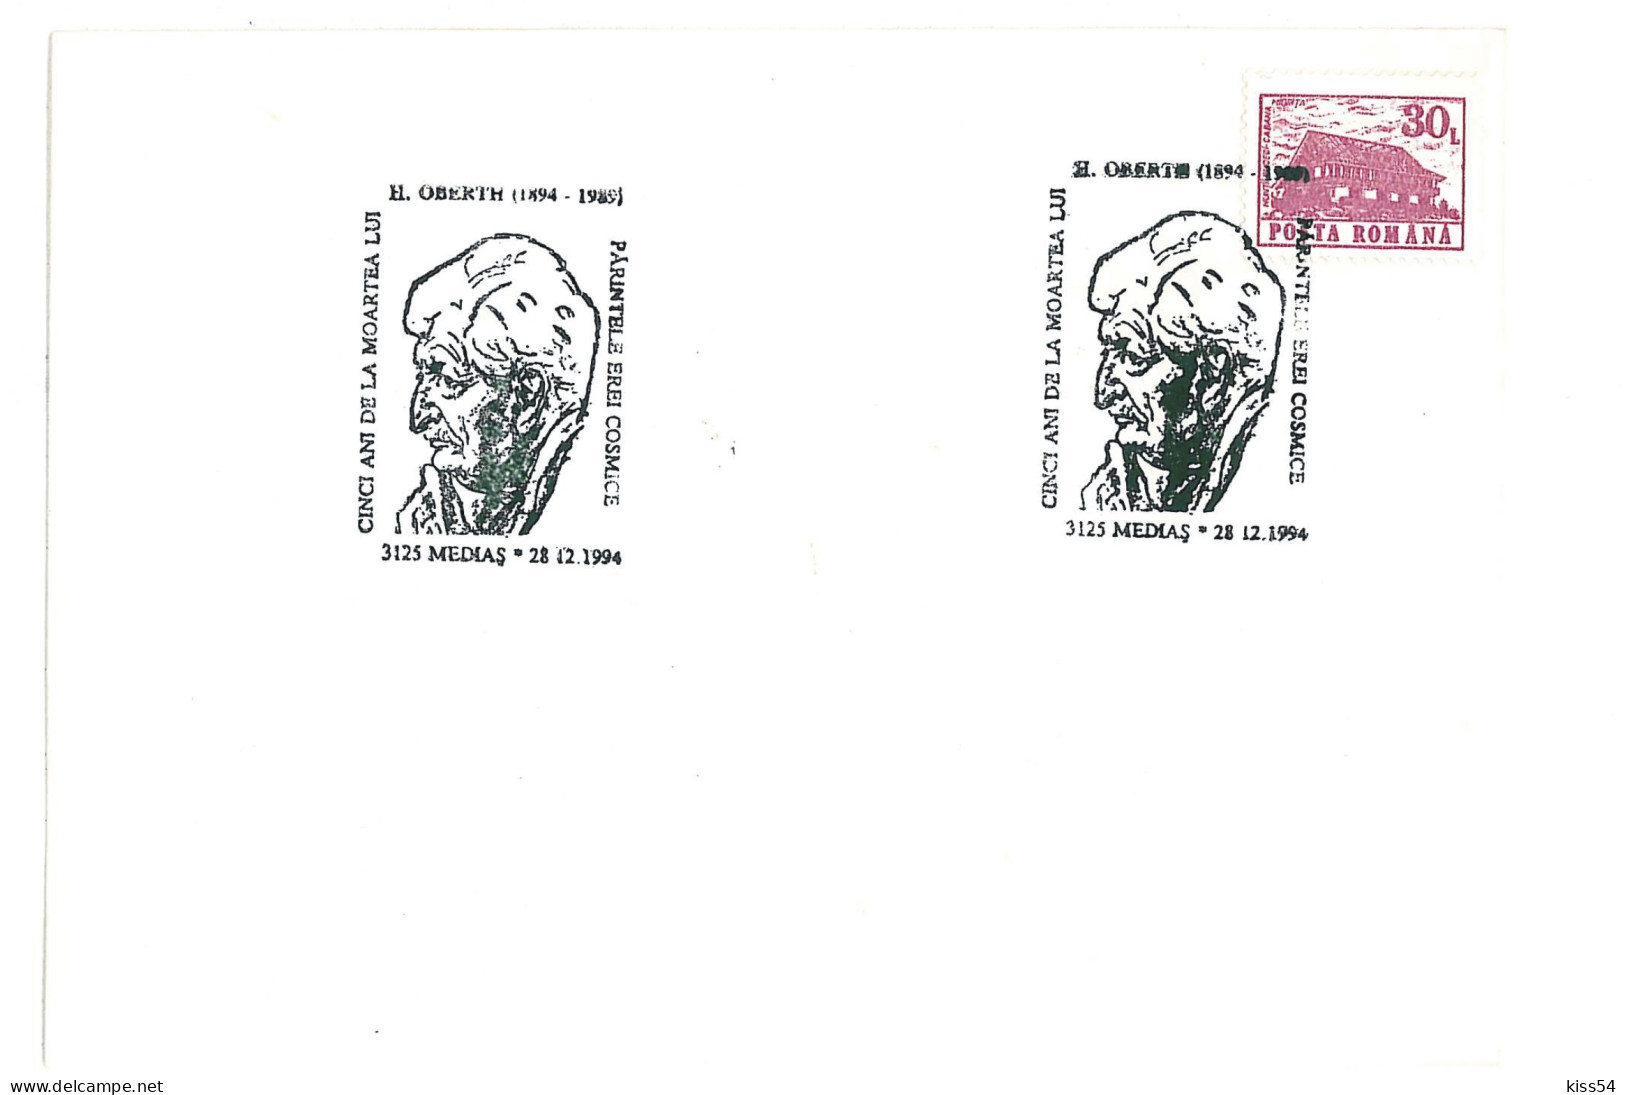 COV 35 - 2050, COSMOS, Herman OBERTH, Romania - Cover - Used - 1990 - Briefe U. Dokumente